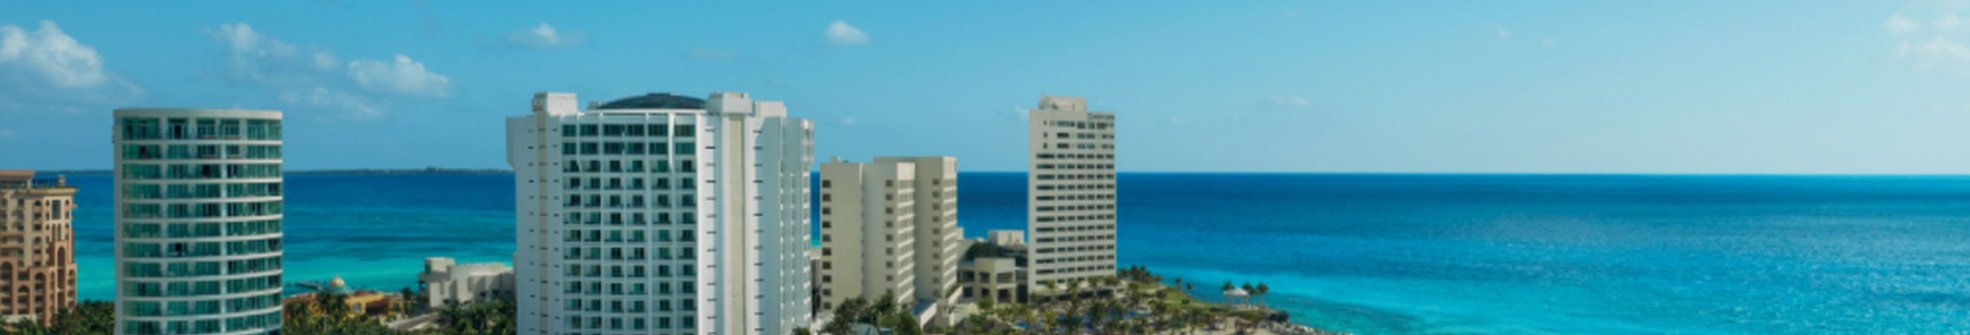 Hotel Krystal Grand Cancun Resort & Spa Hotel Krystal Grand Cancun Resort & Spa - 